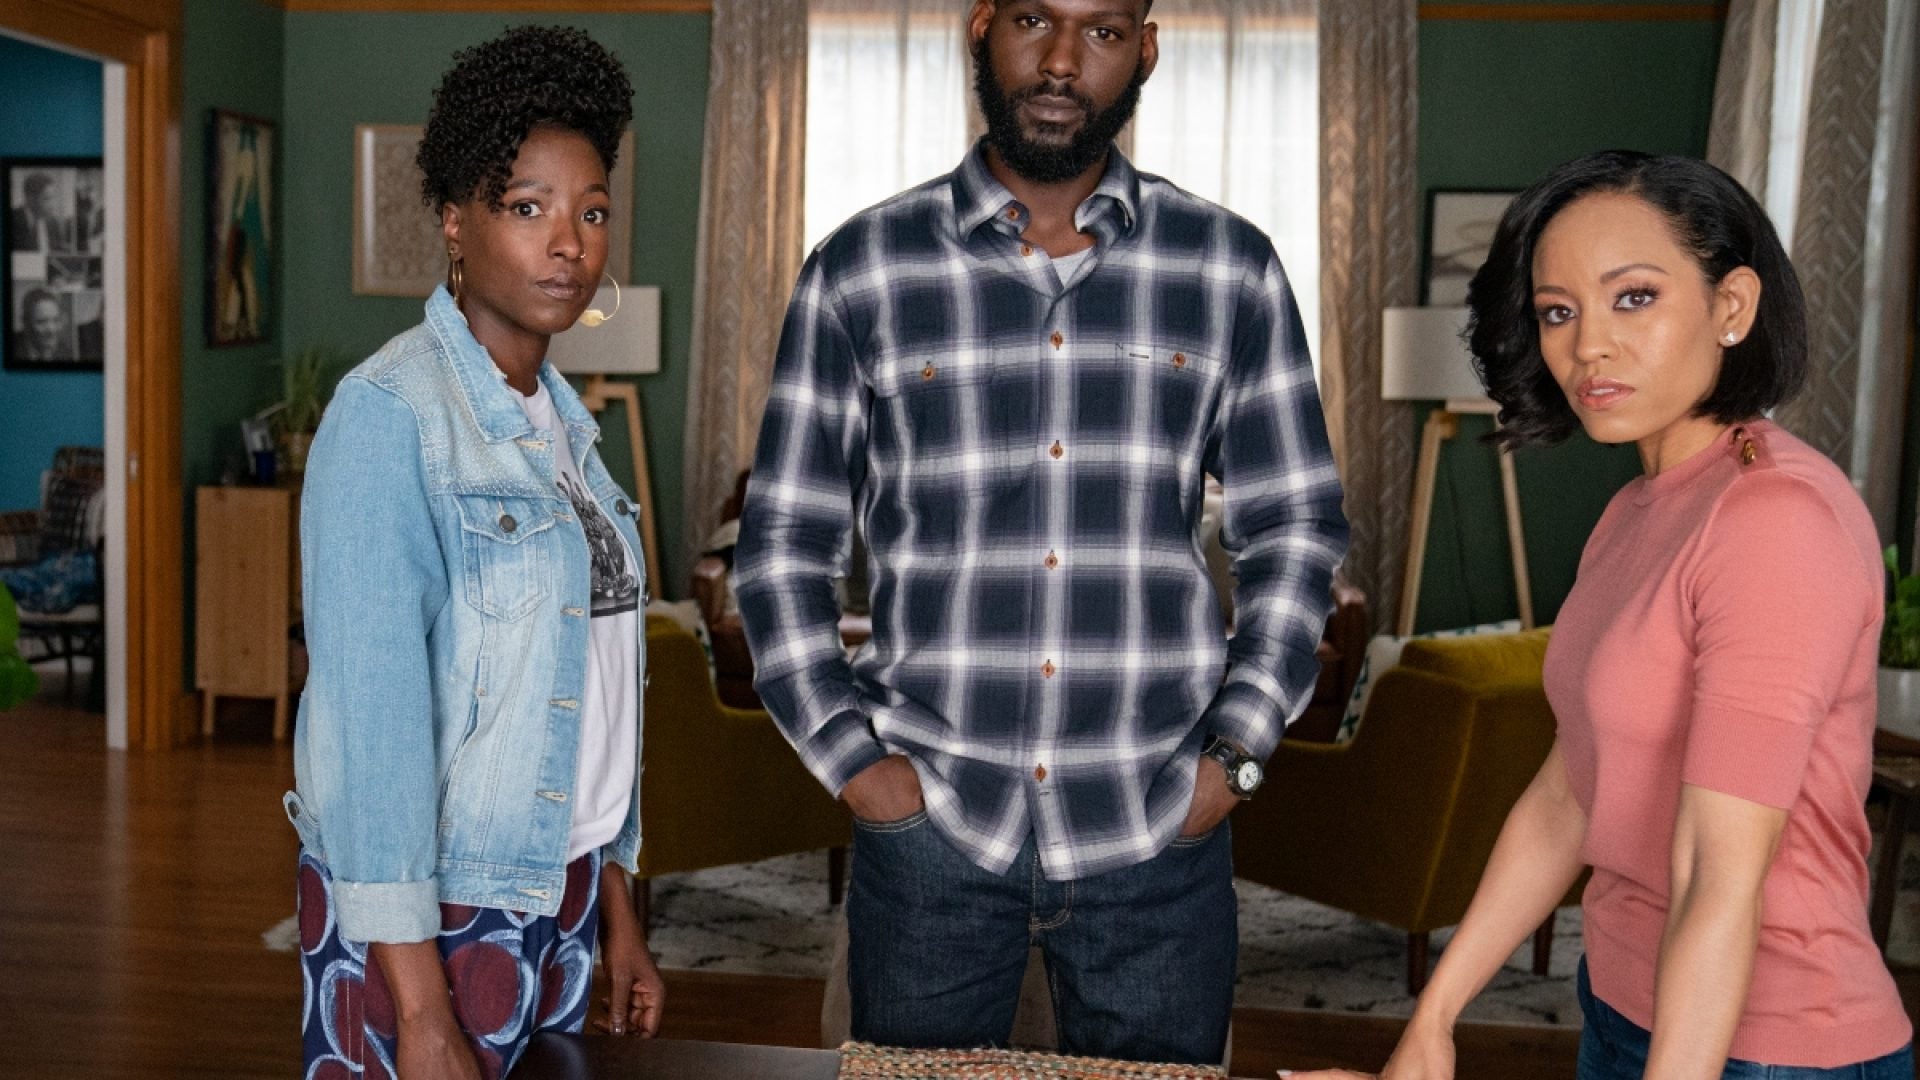 Kofi Siriboe On Expanding The View Of Black Manhood On Screen